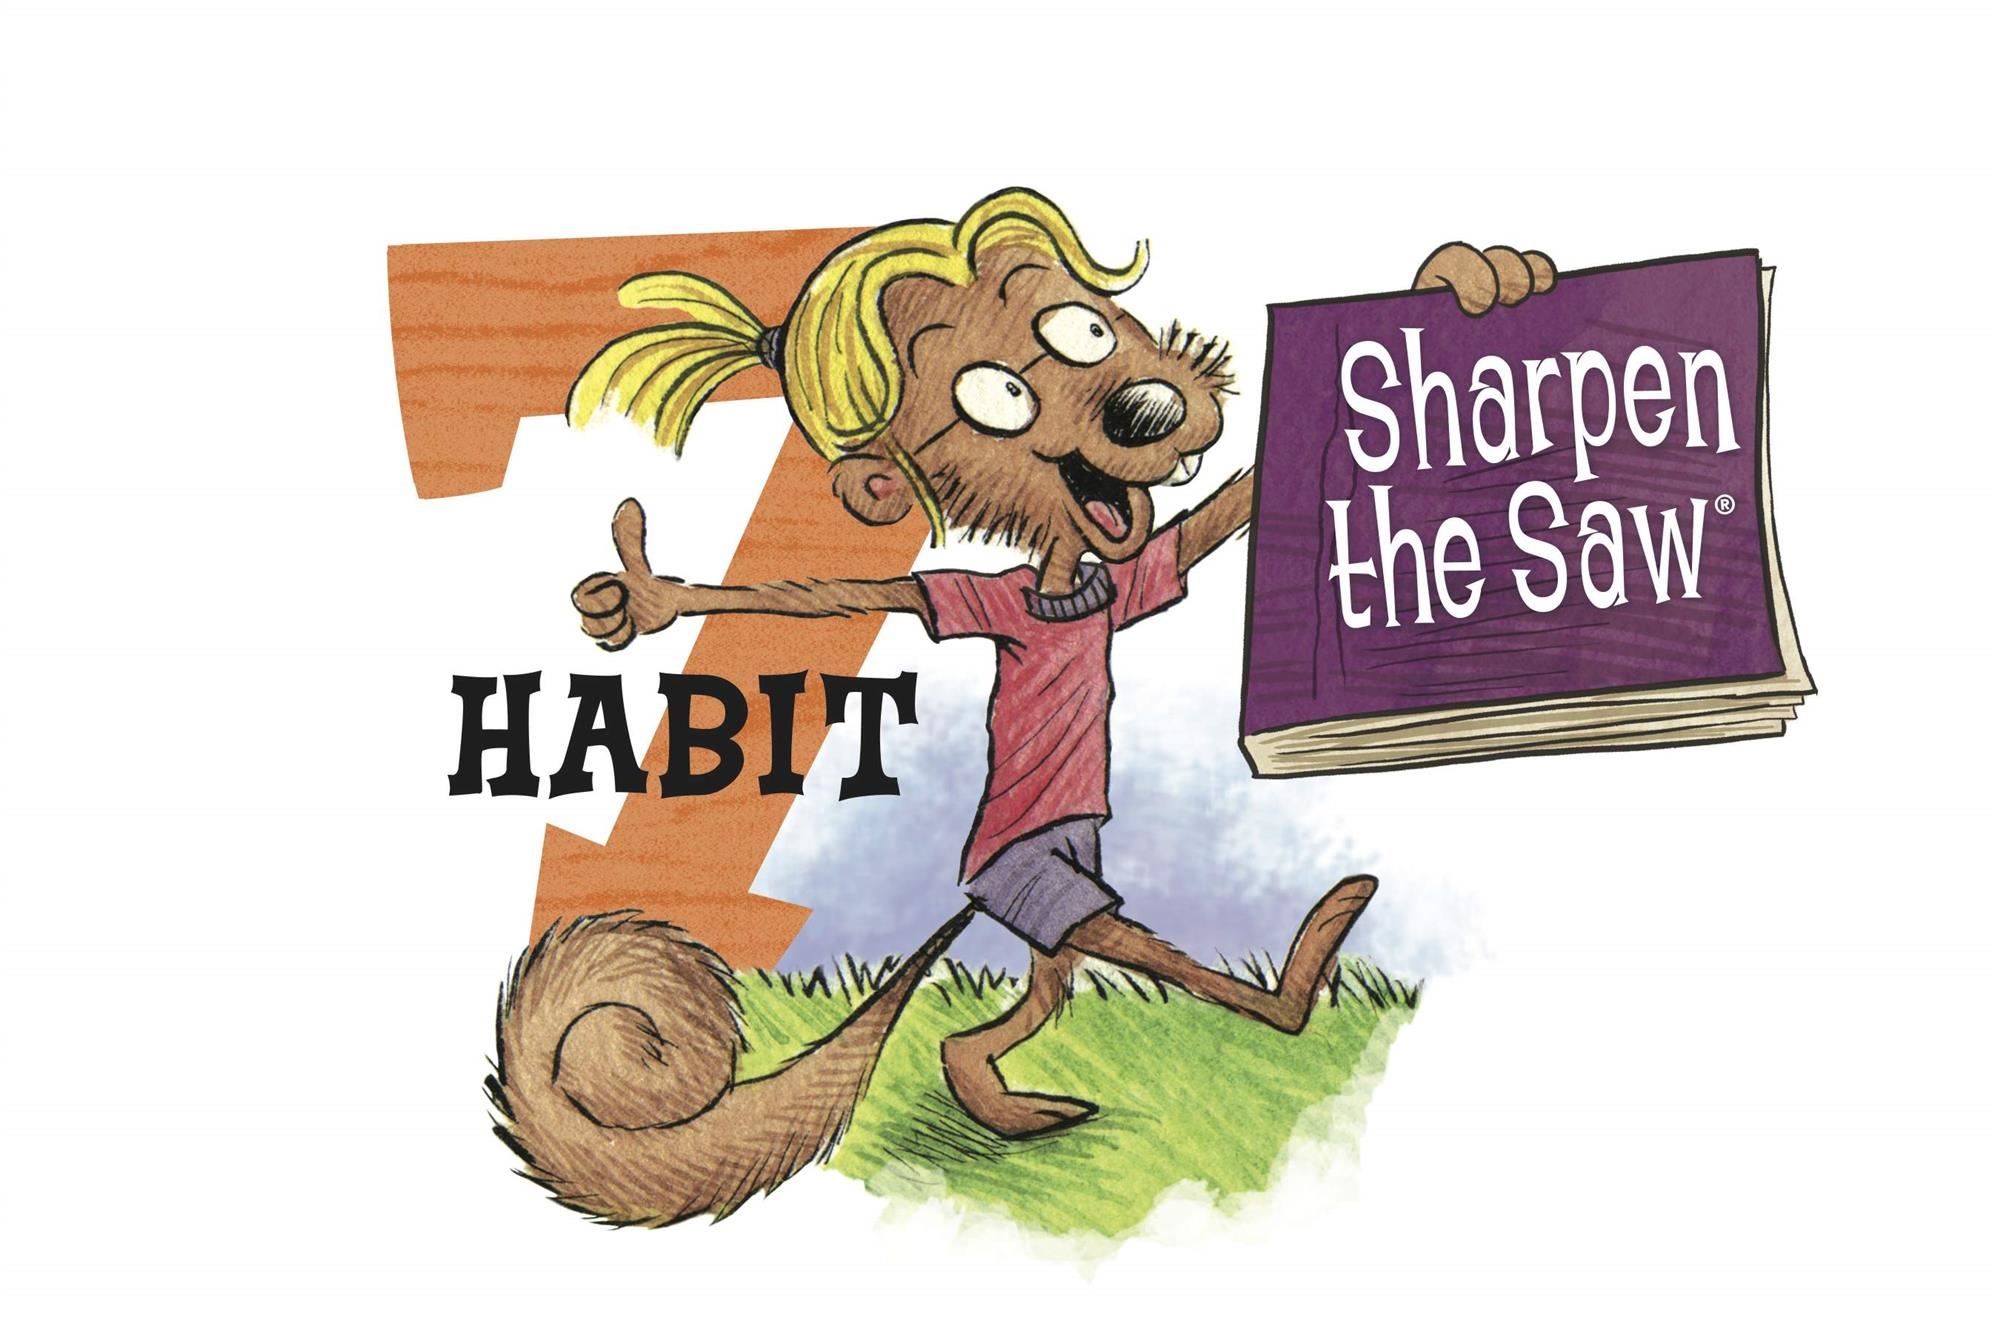 Habit 7: Sharpen the Saw 